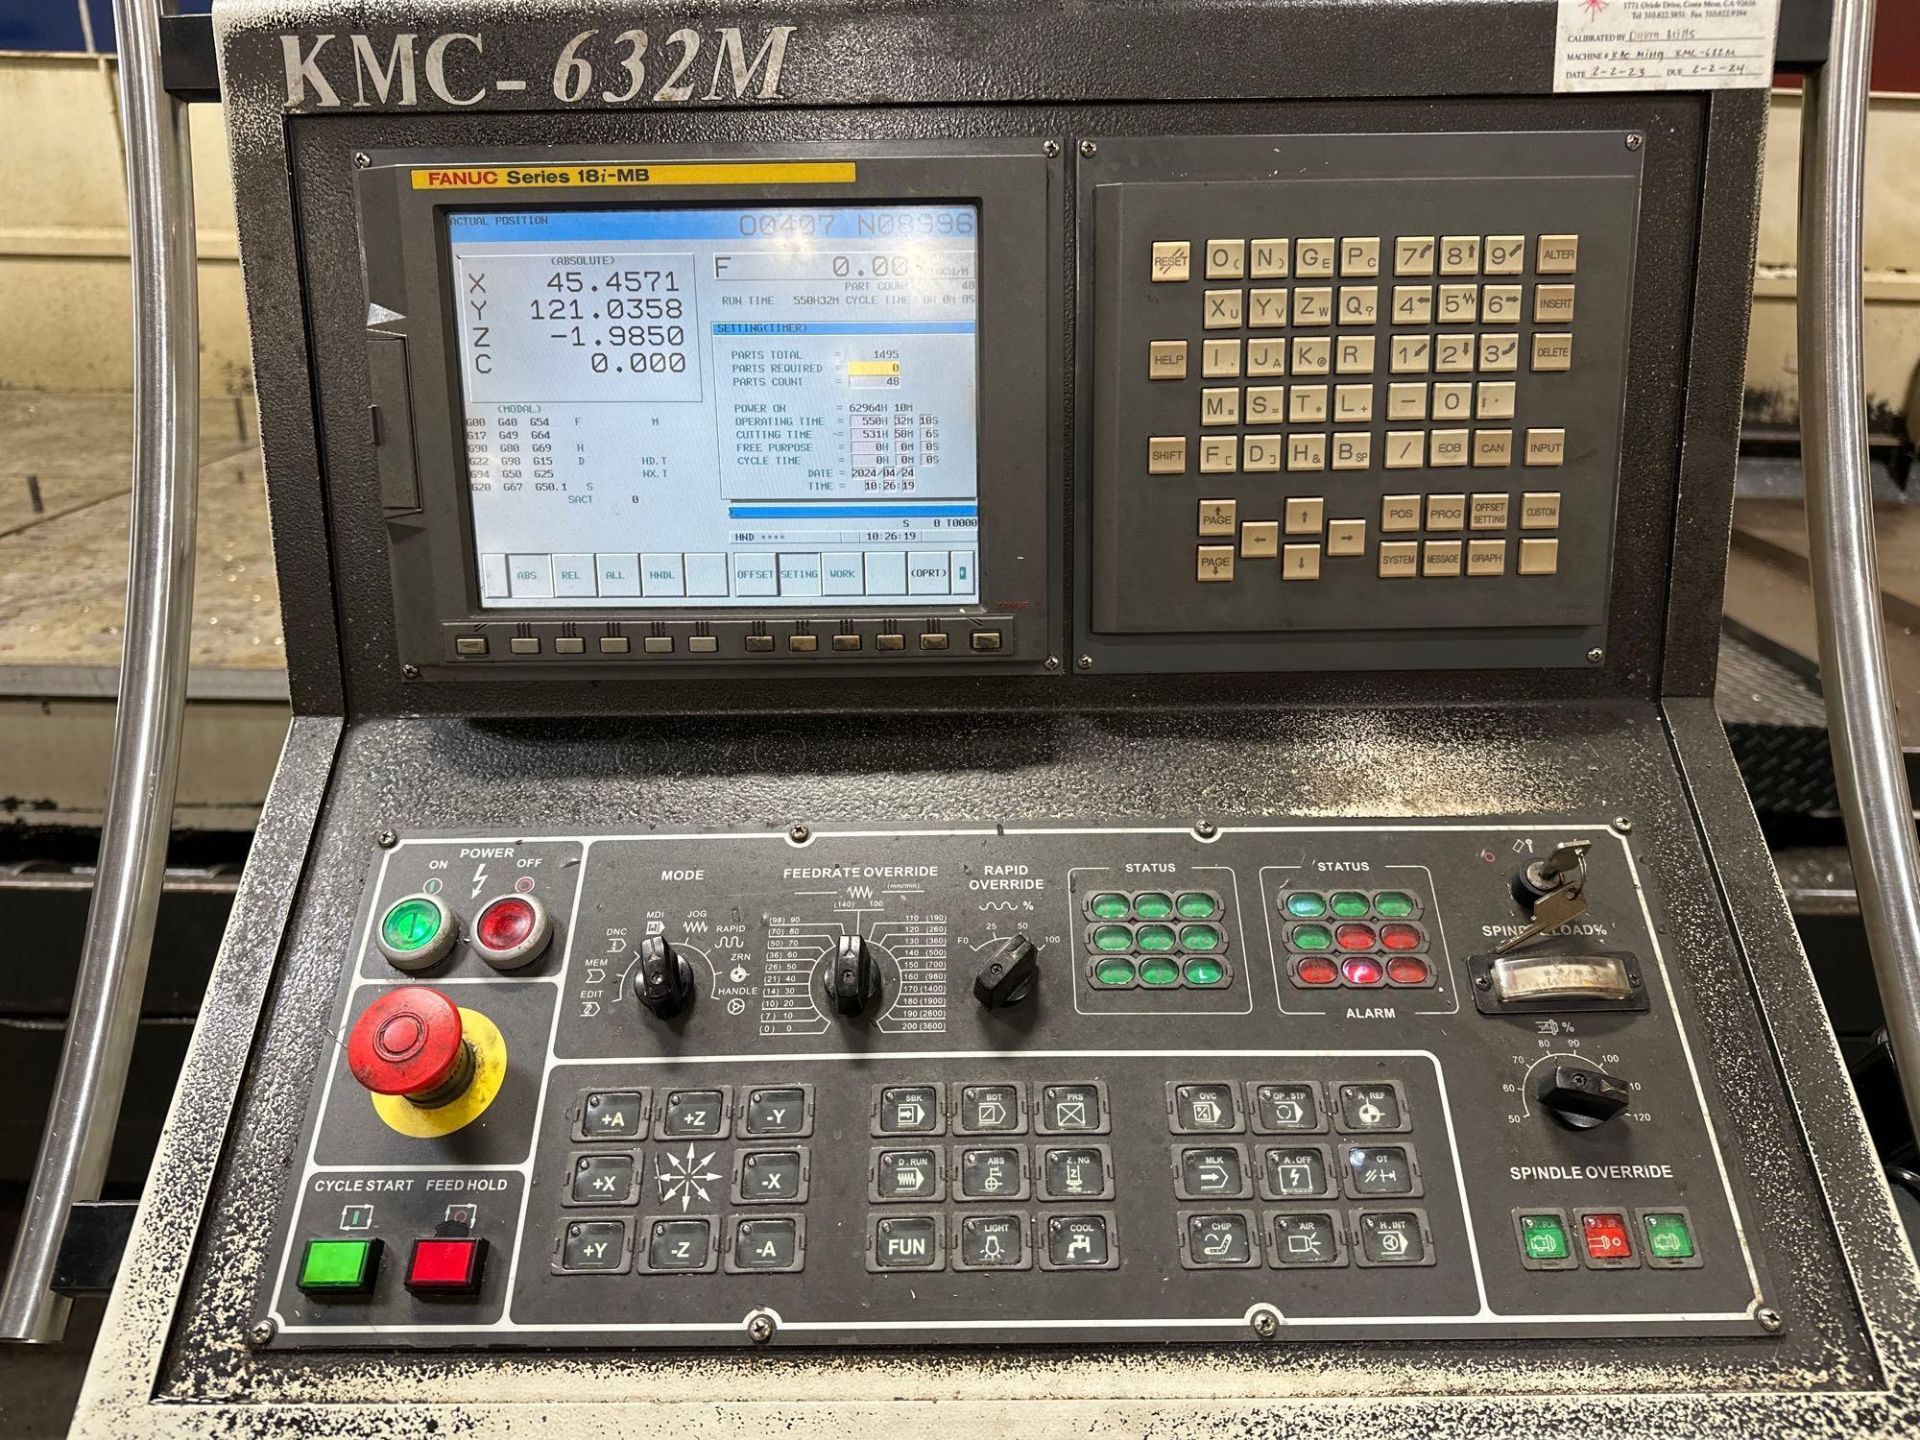 Kao Ming KMC-632M, Fanuc 18iMB, 236" x 126" x 43" travels, 106” x 128” Table, 4000 RPM, CT50, 30 ATC - Image 11 of 14